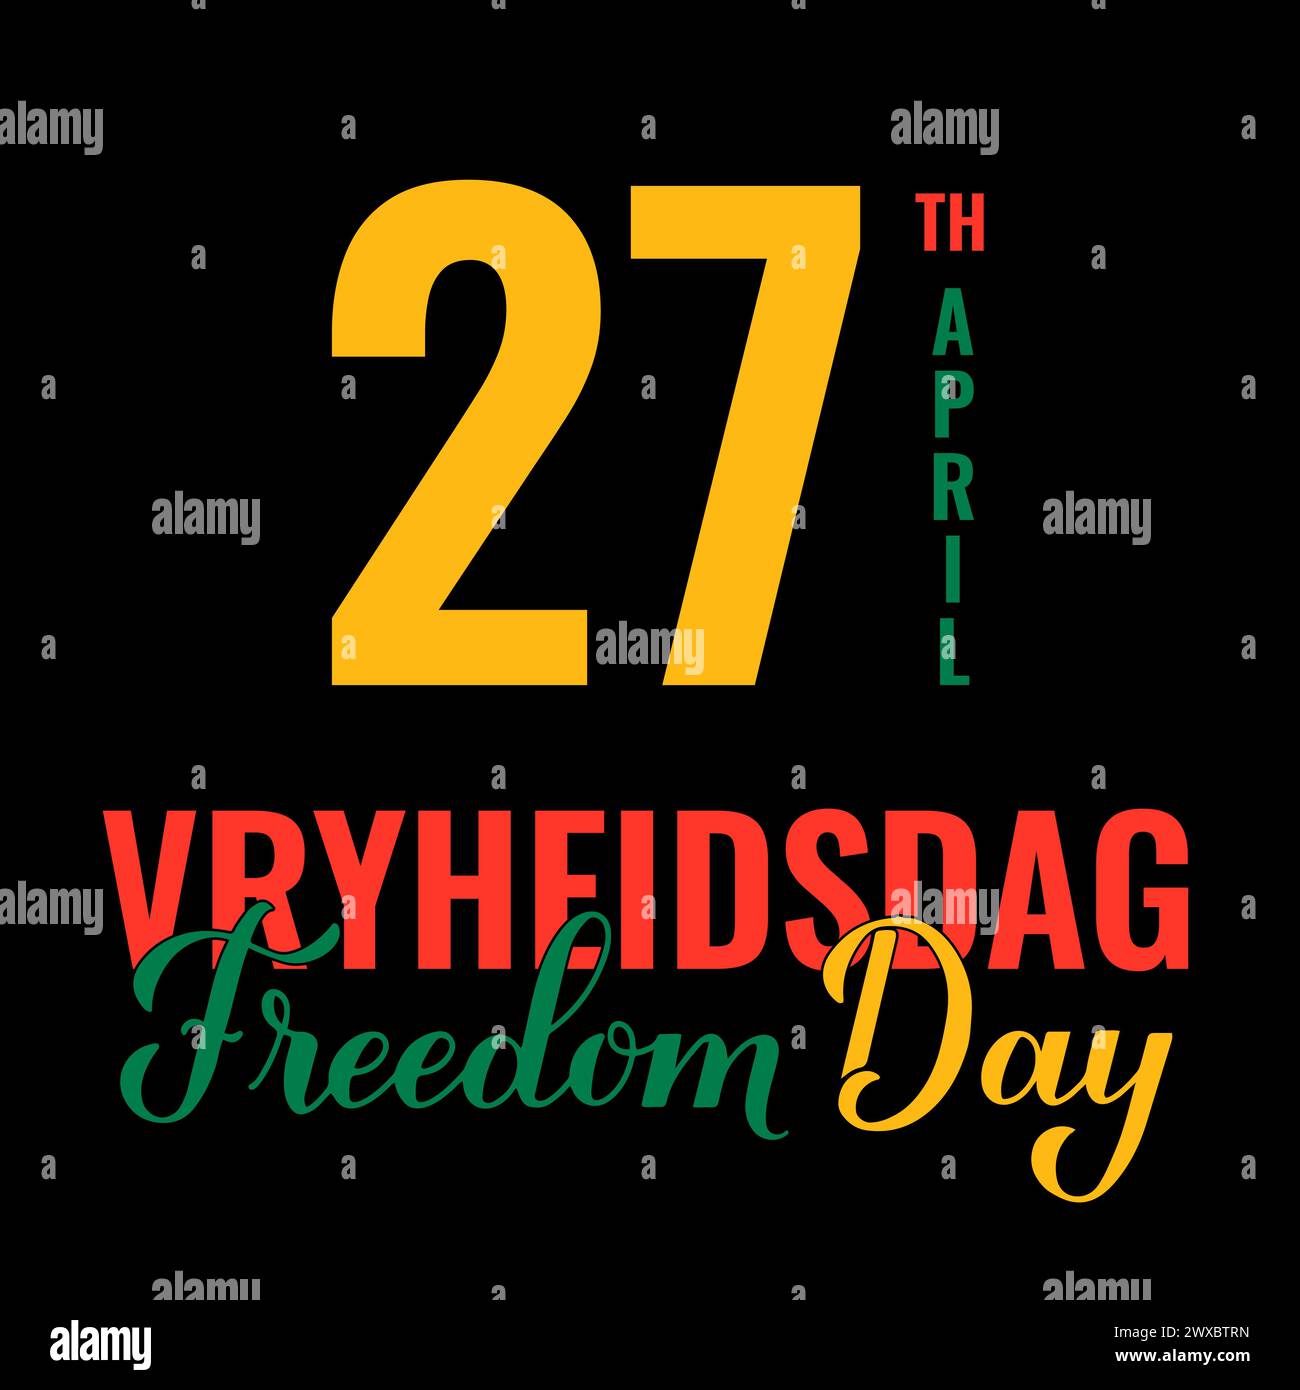 Vryheidsdag - Tag Der Freiheit In Südafrika. Nationalfeiertag am 27. April. Vektorvorlage für Typografie Poster, Banner, Flyer, Postkarte usw. Stock Vektor